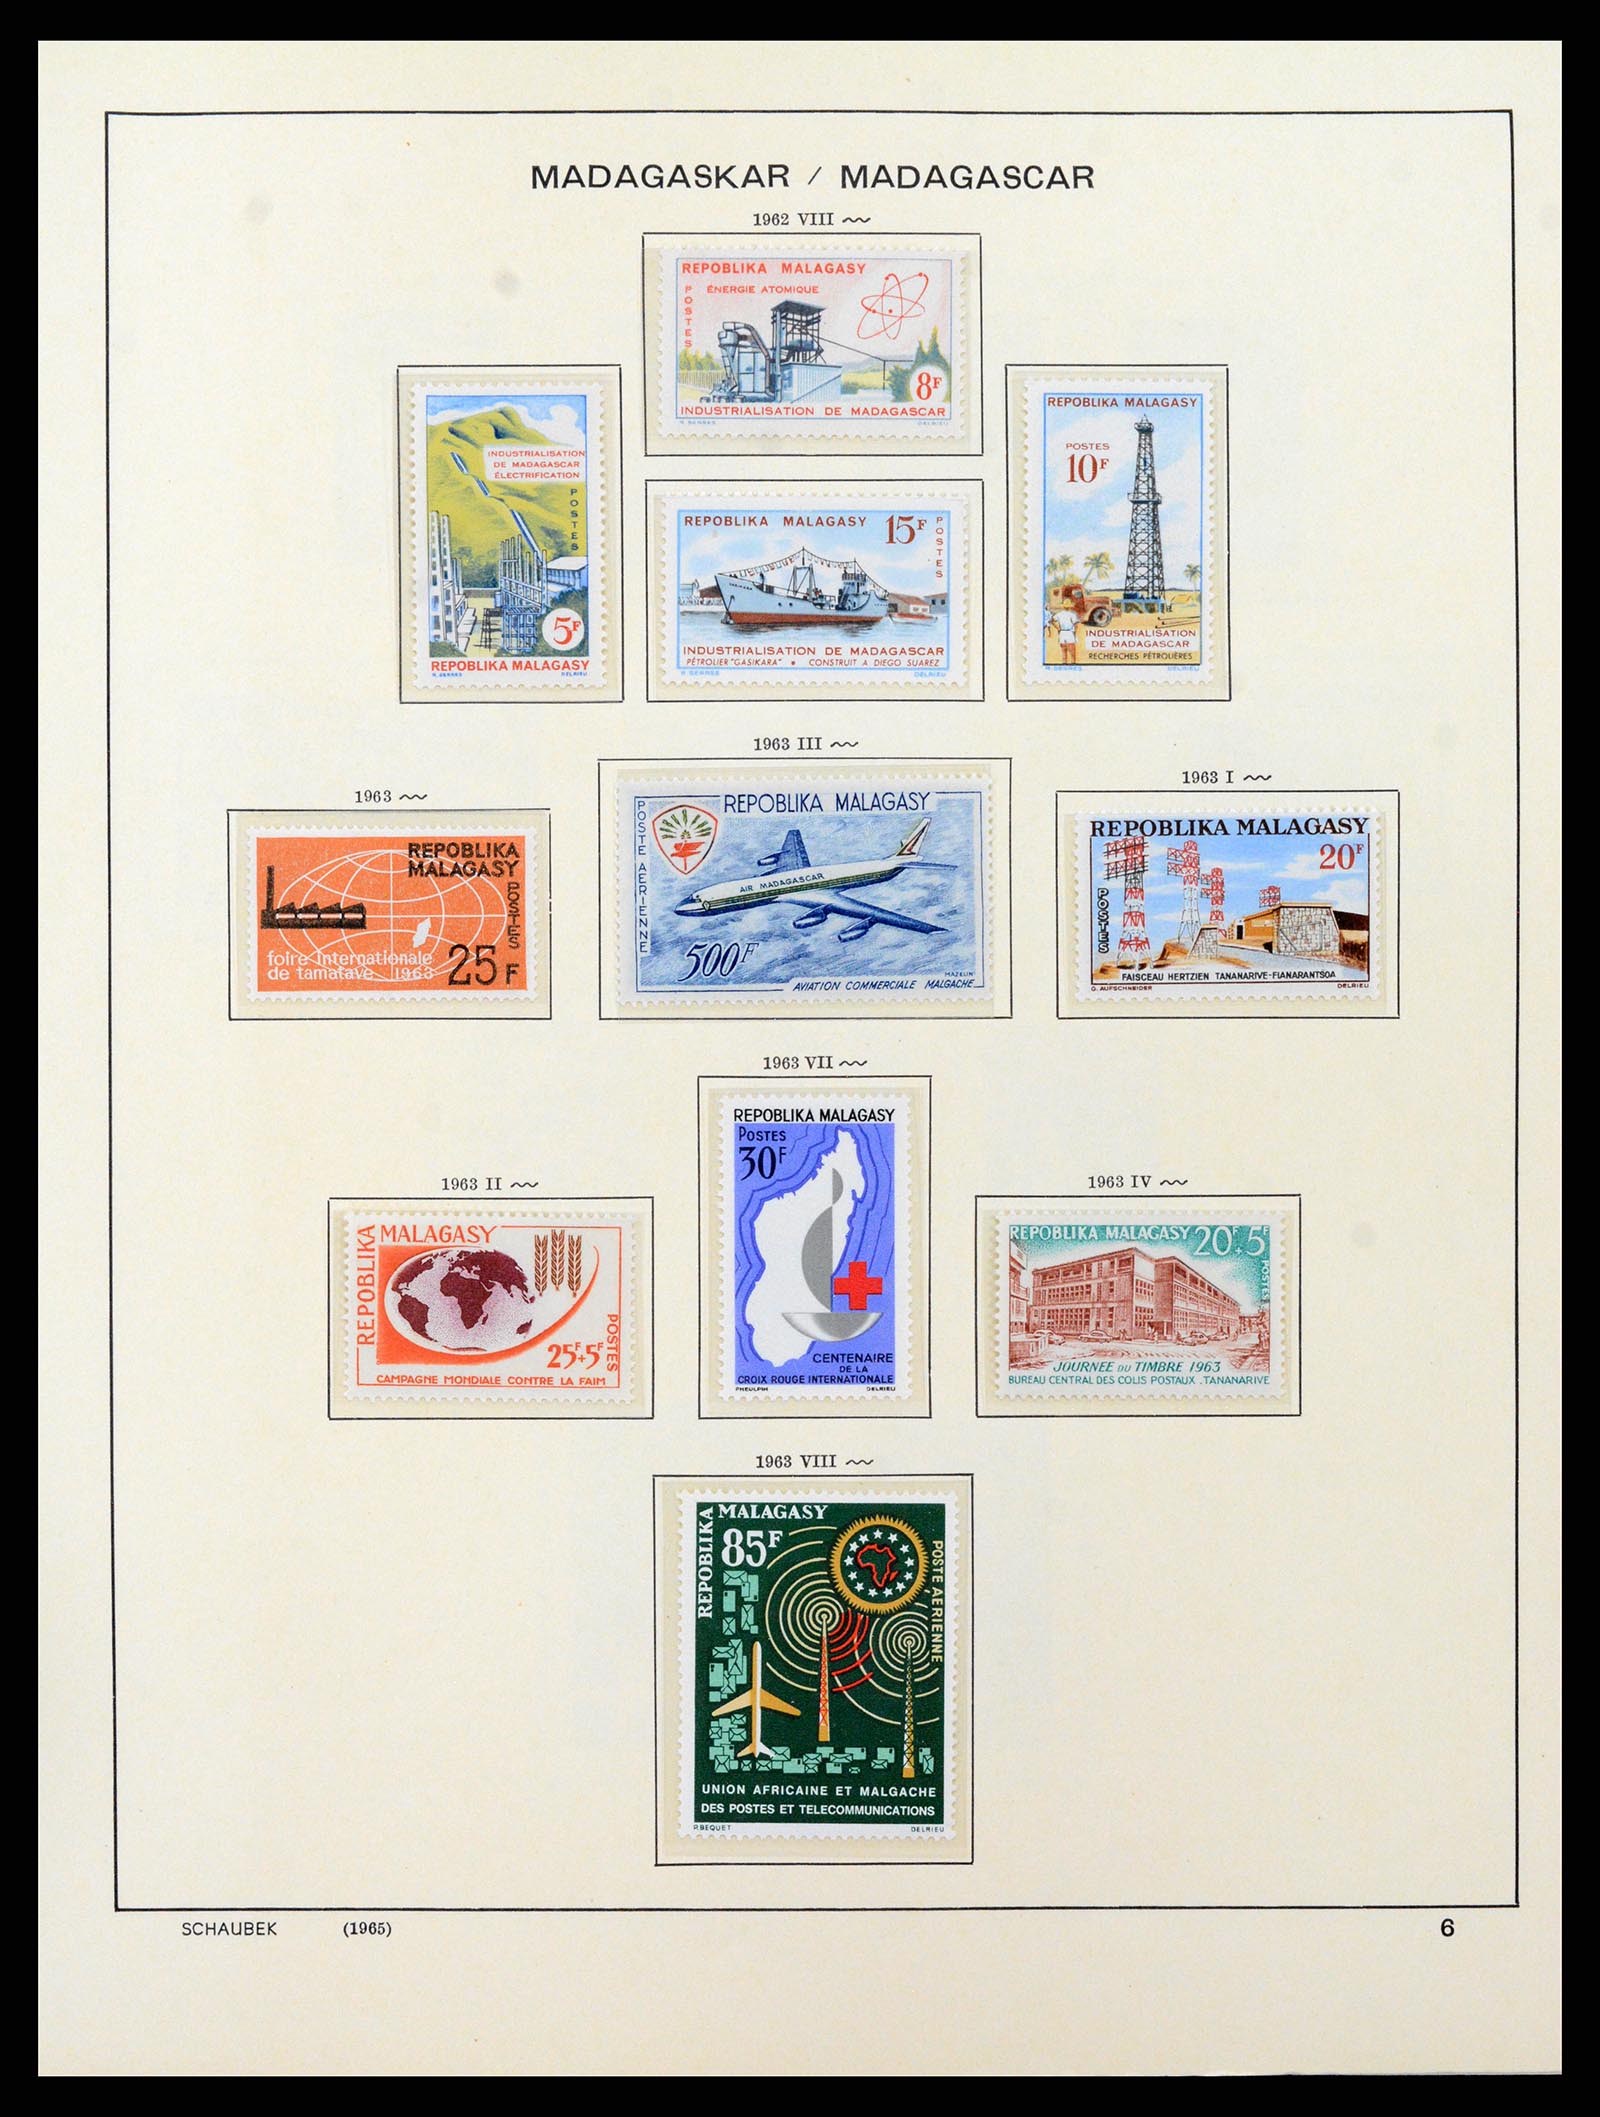 37929 099 - Stamp Collection 37929 Madagascar 1889-2000.